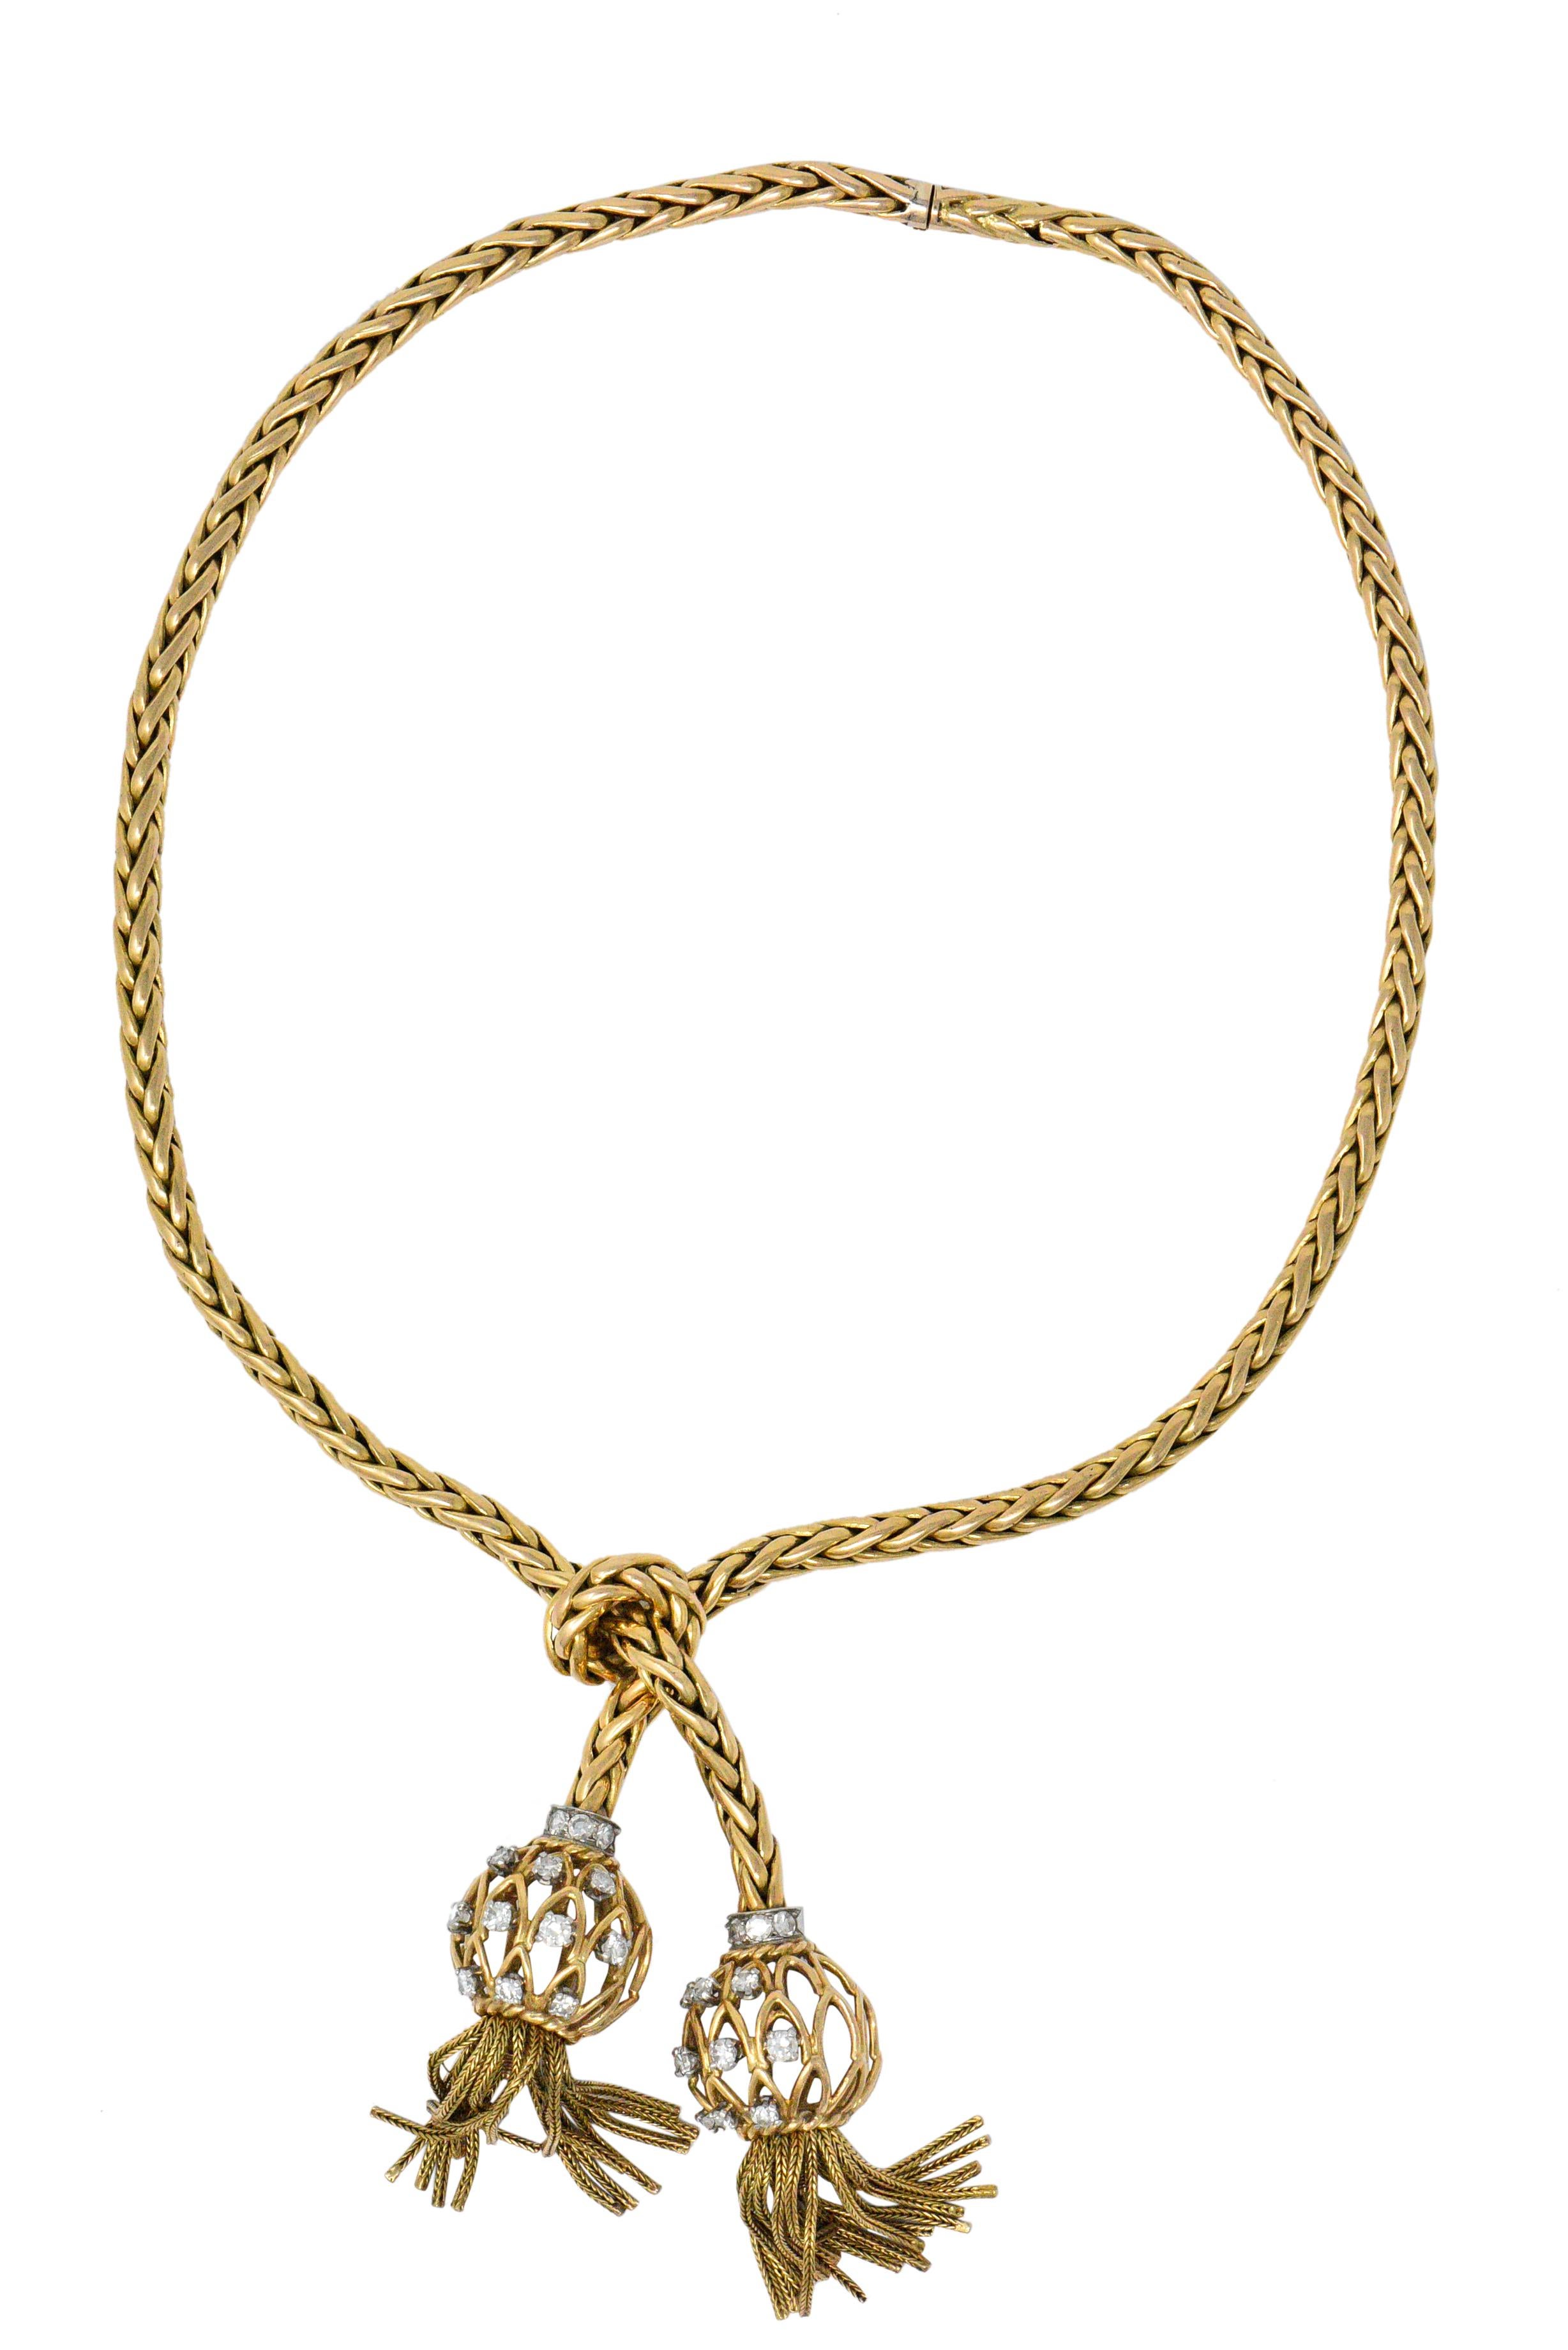 Retro Pierre Sterlé Diamond Platinum and 18 Karat Gold Tassel Necklace Paris 1